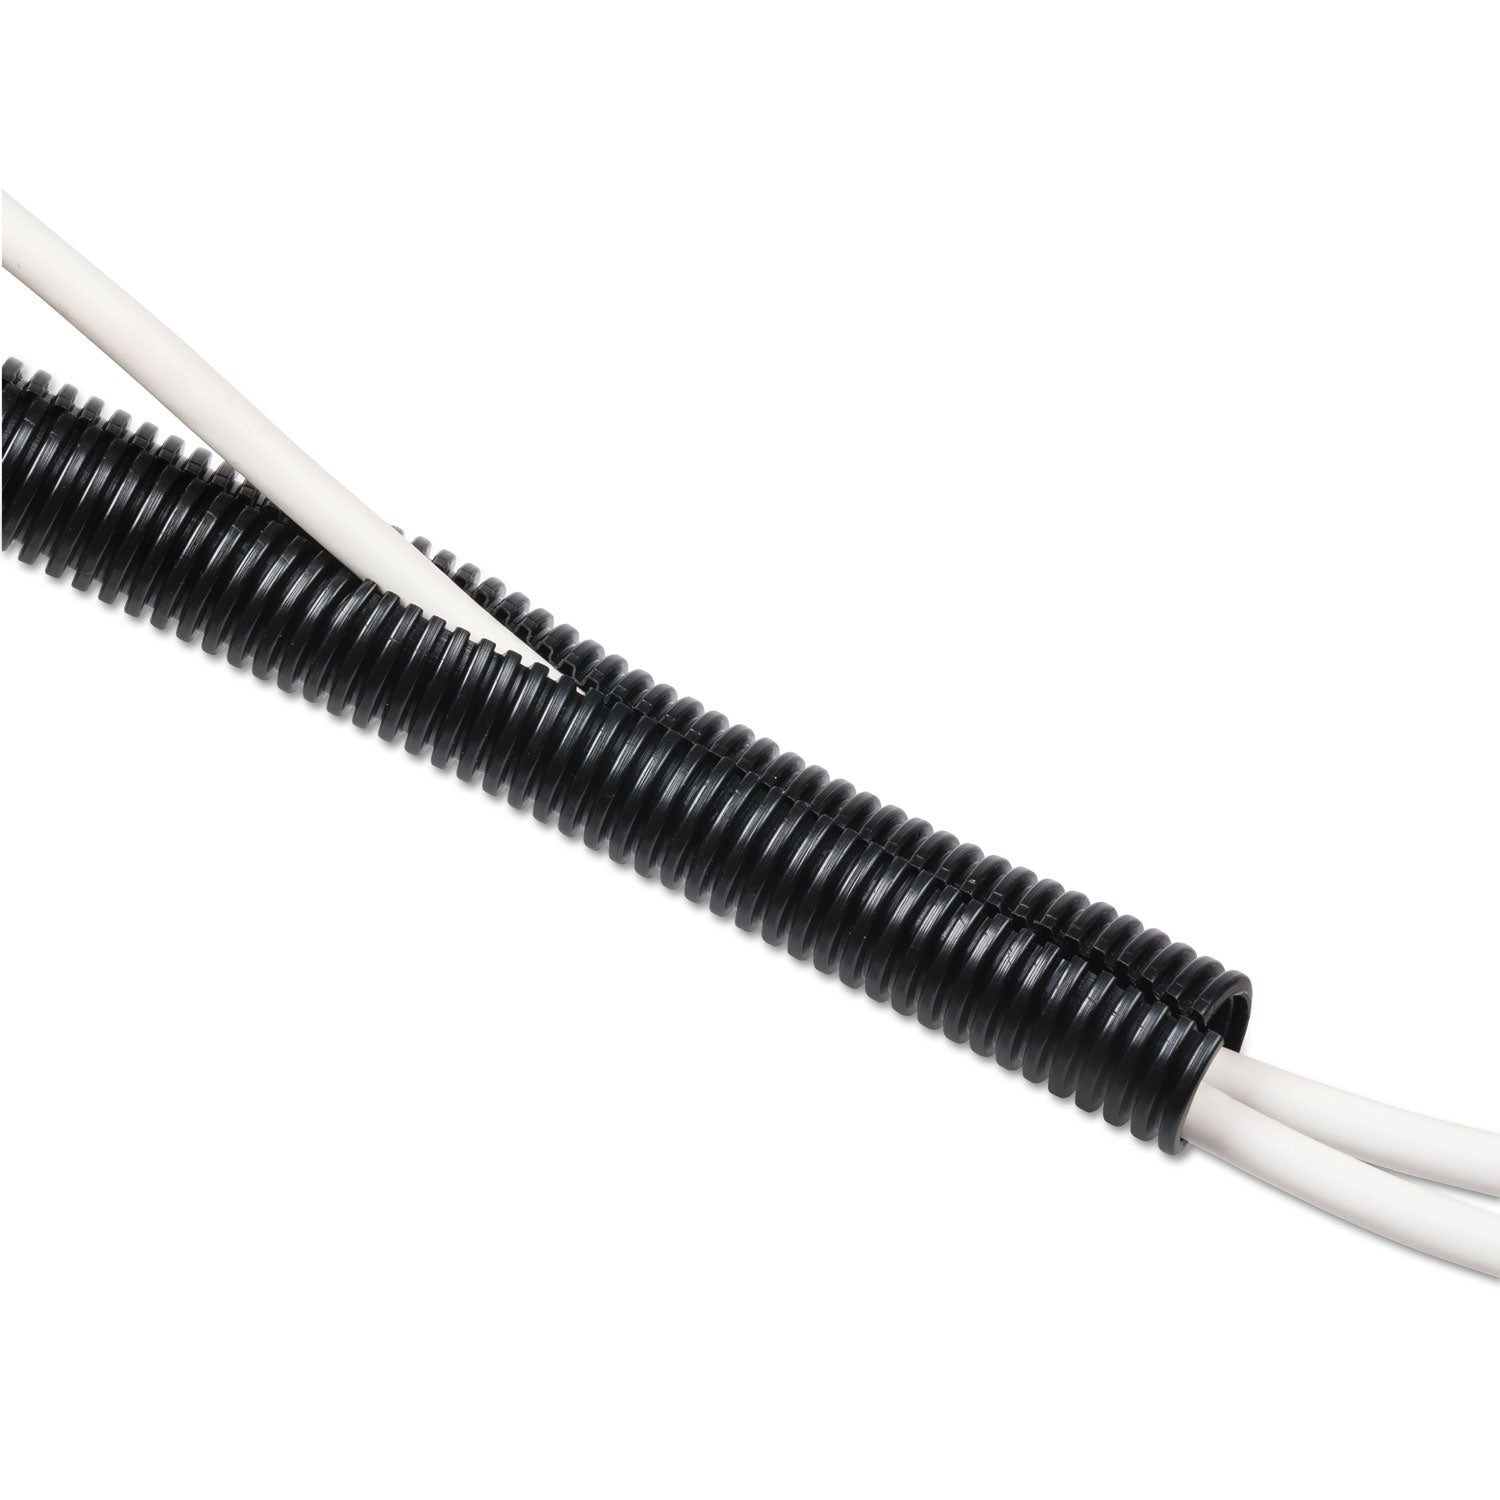 Cable Tidy Tube, 1" Diameter x 43" Long, Black - 